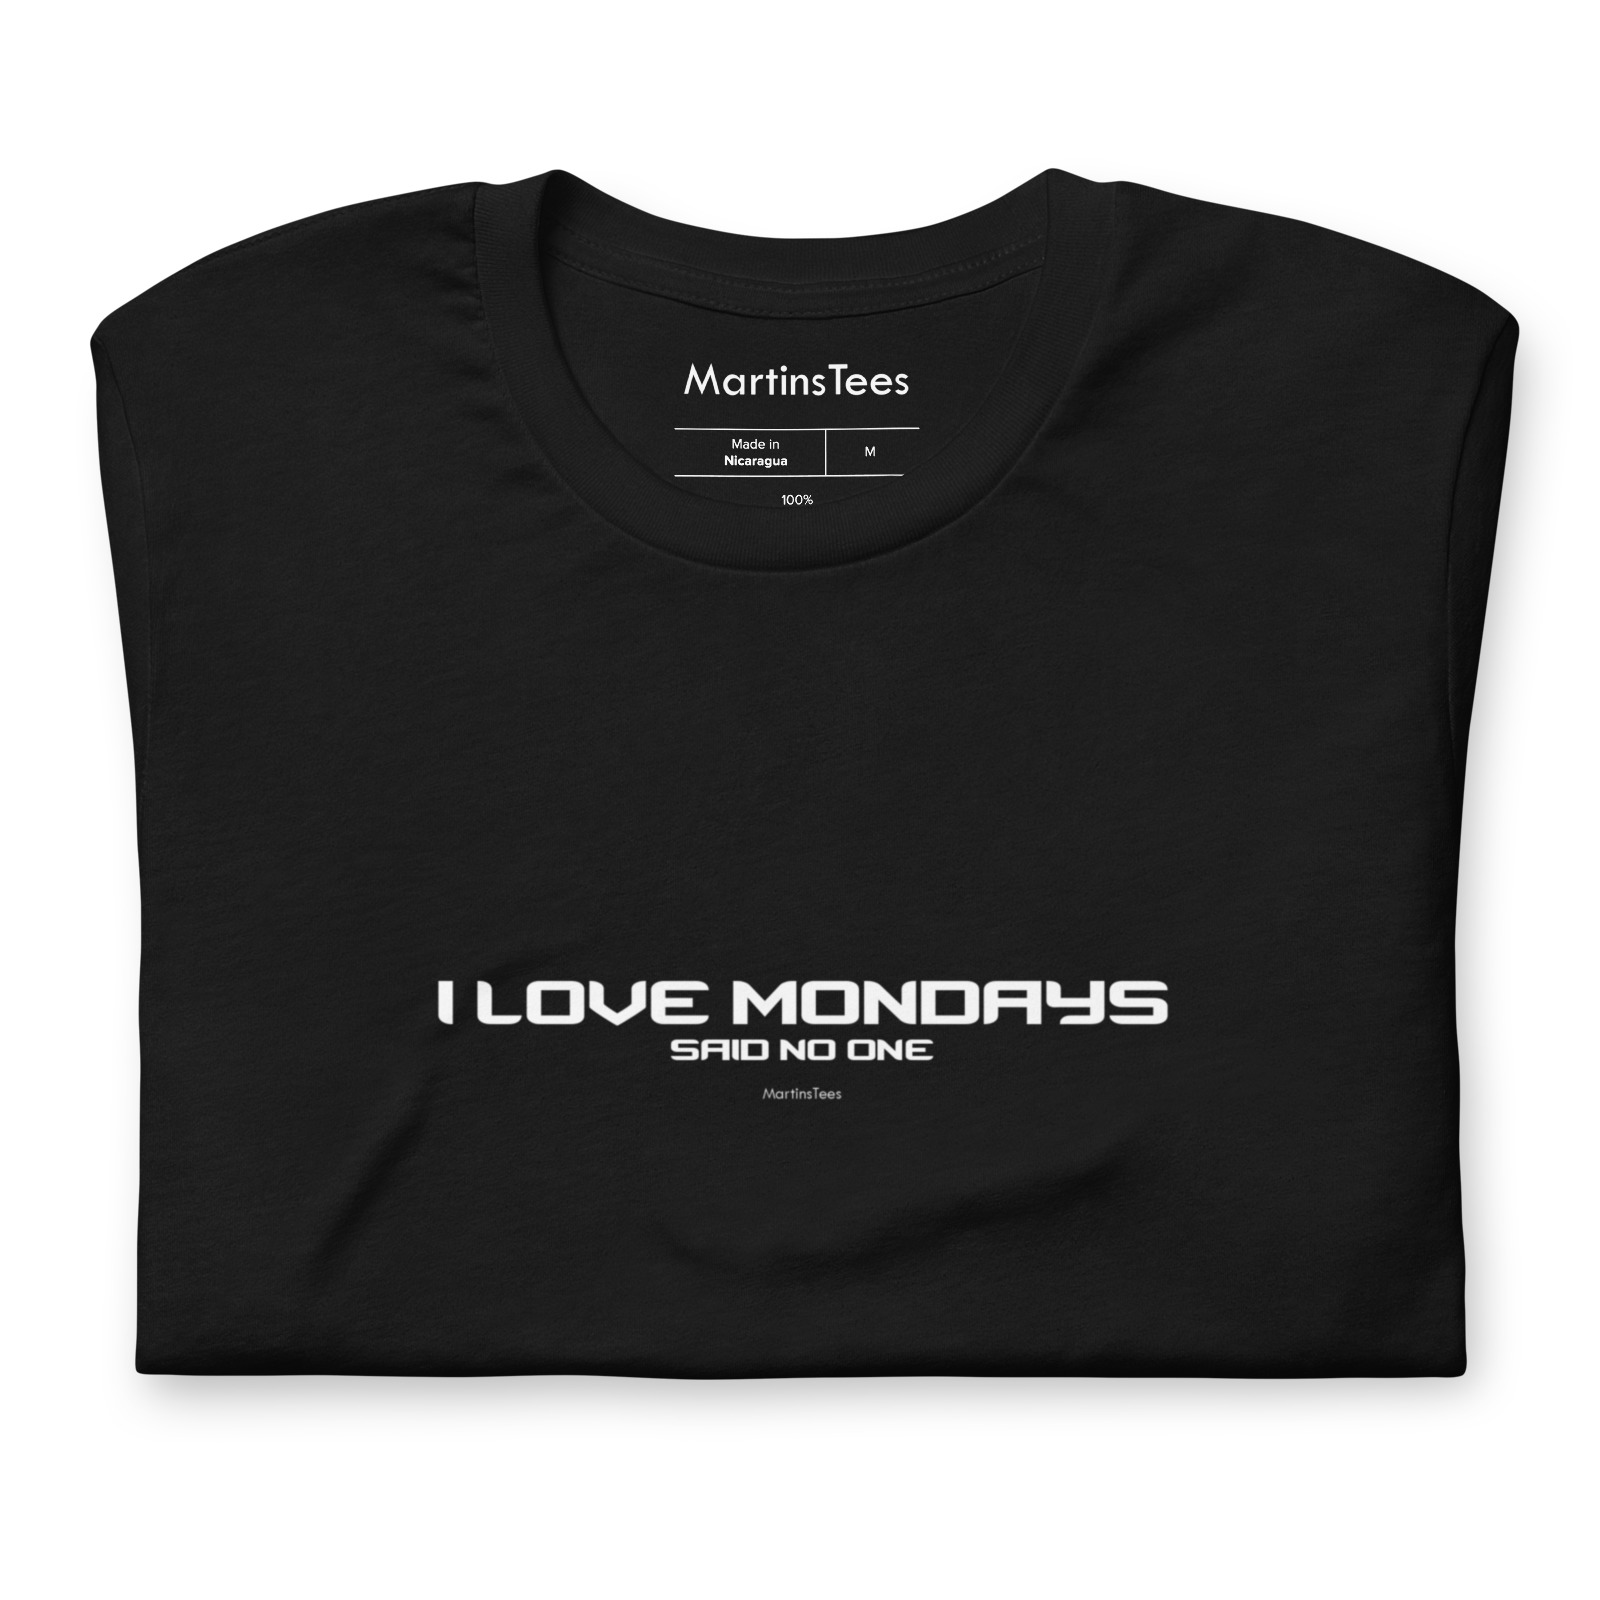 T-shirt: I LOVE MONDAYS - SAID NO ONE